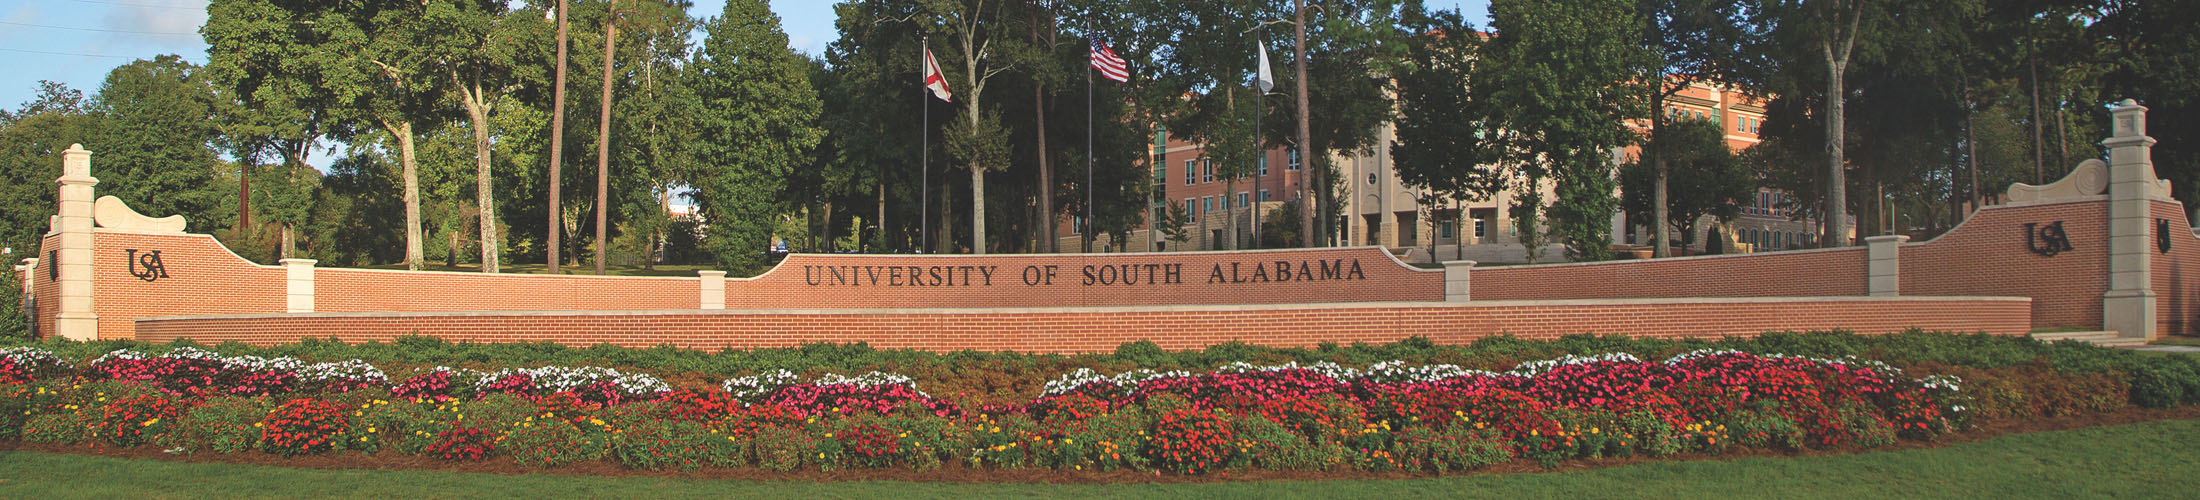 University of South Alabama Street Sign